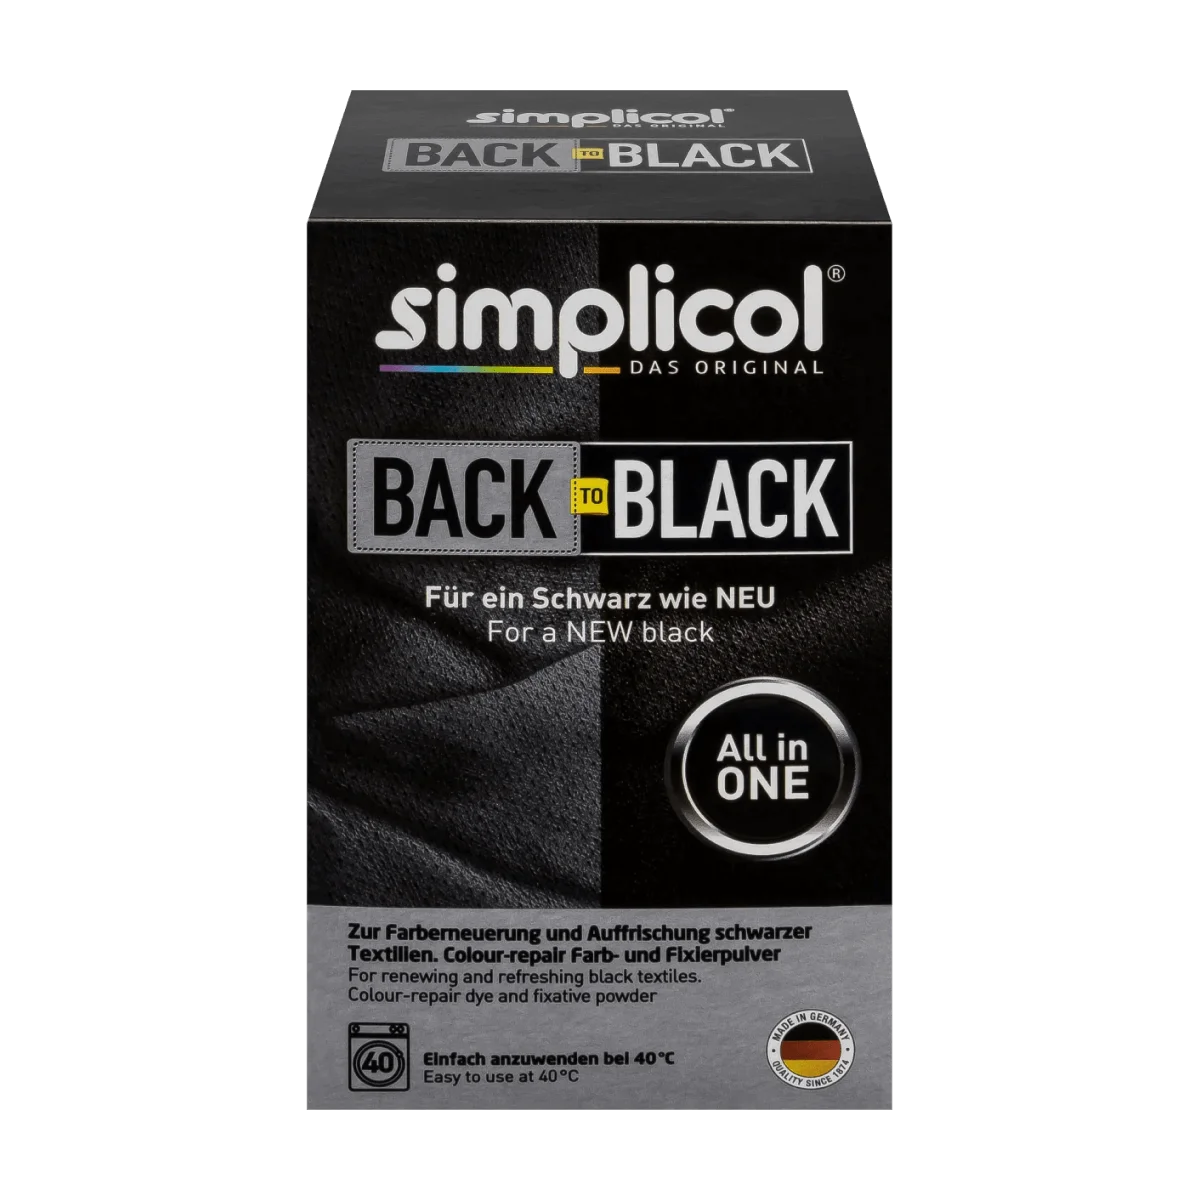 Simplicol Textilfarbe Back to Black Farberneuerung, 400 g